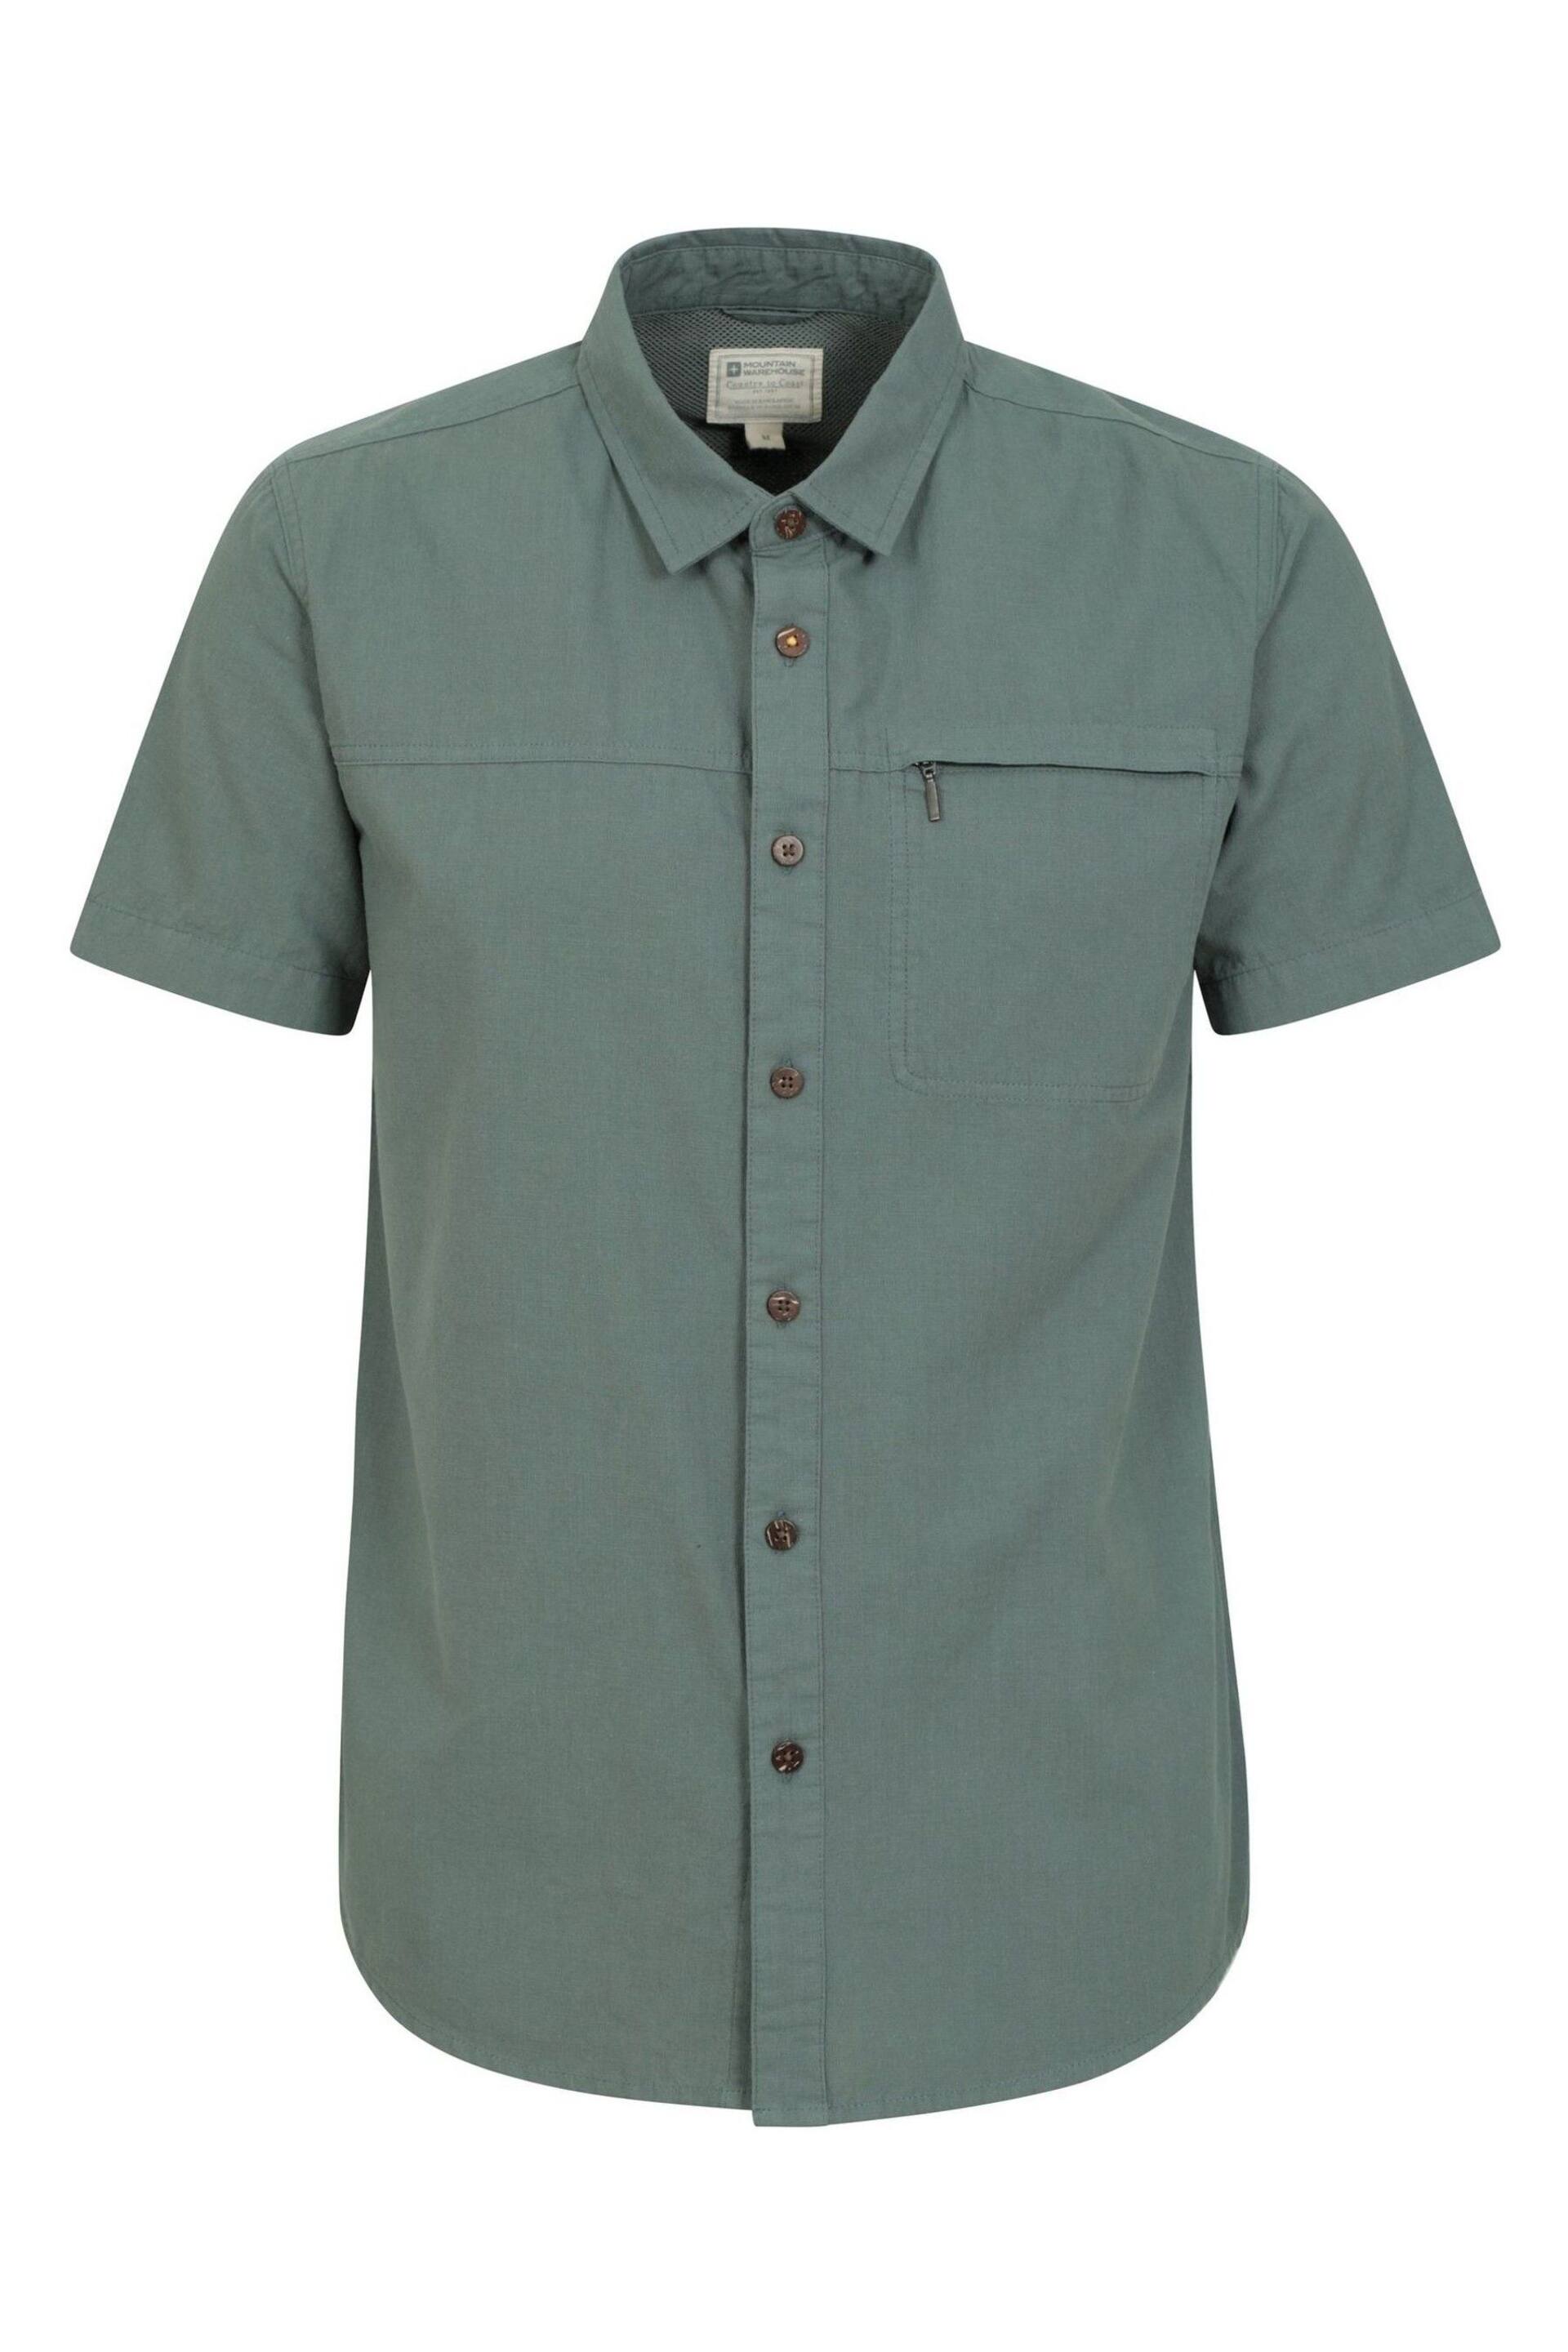 Mountain Warehouse Green Coconut Slub Texture 100% Cotton Mens Shirt g - Image 5 of 6